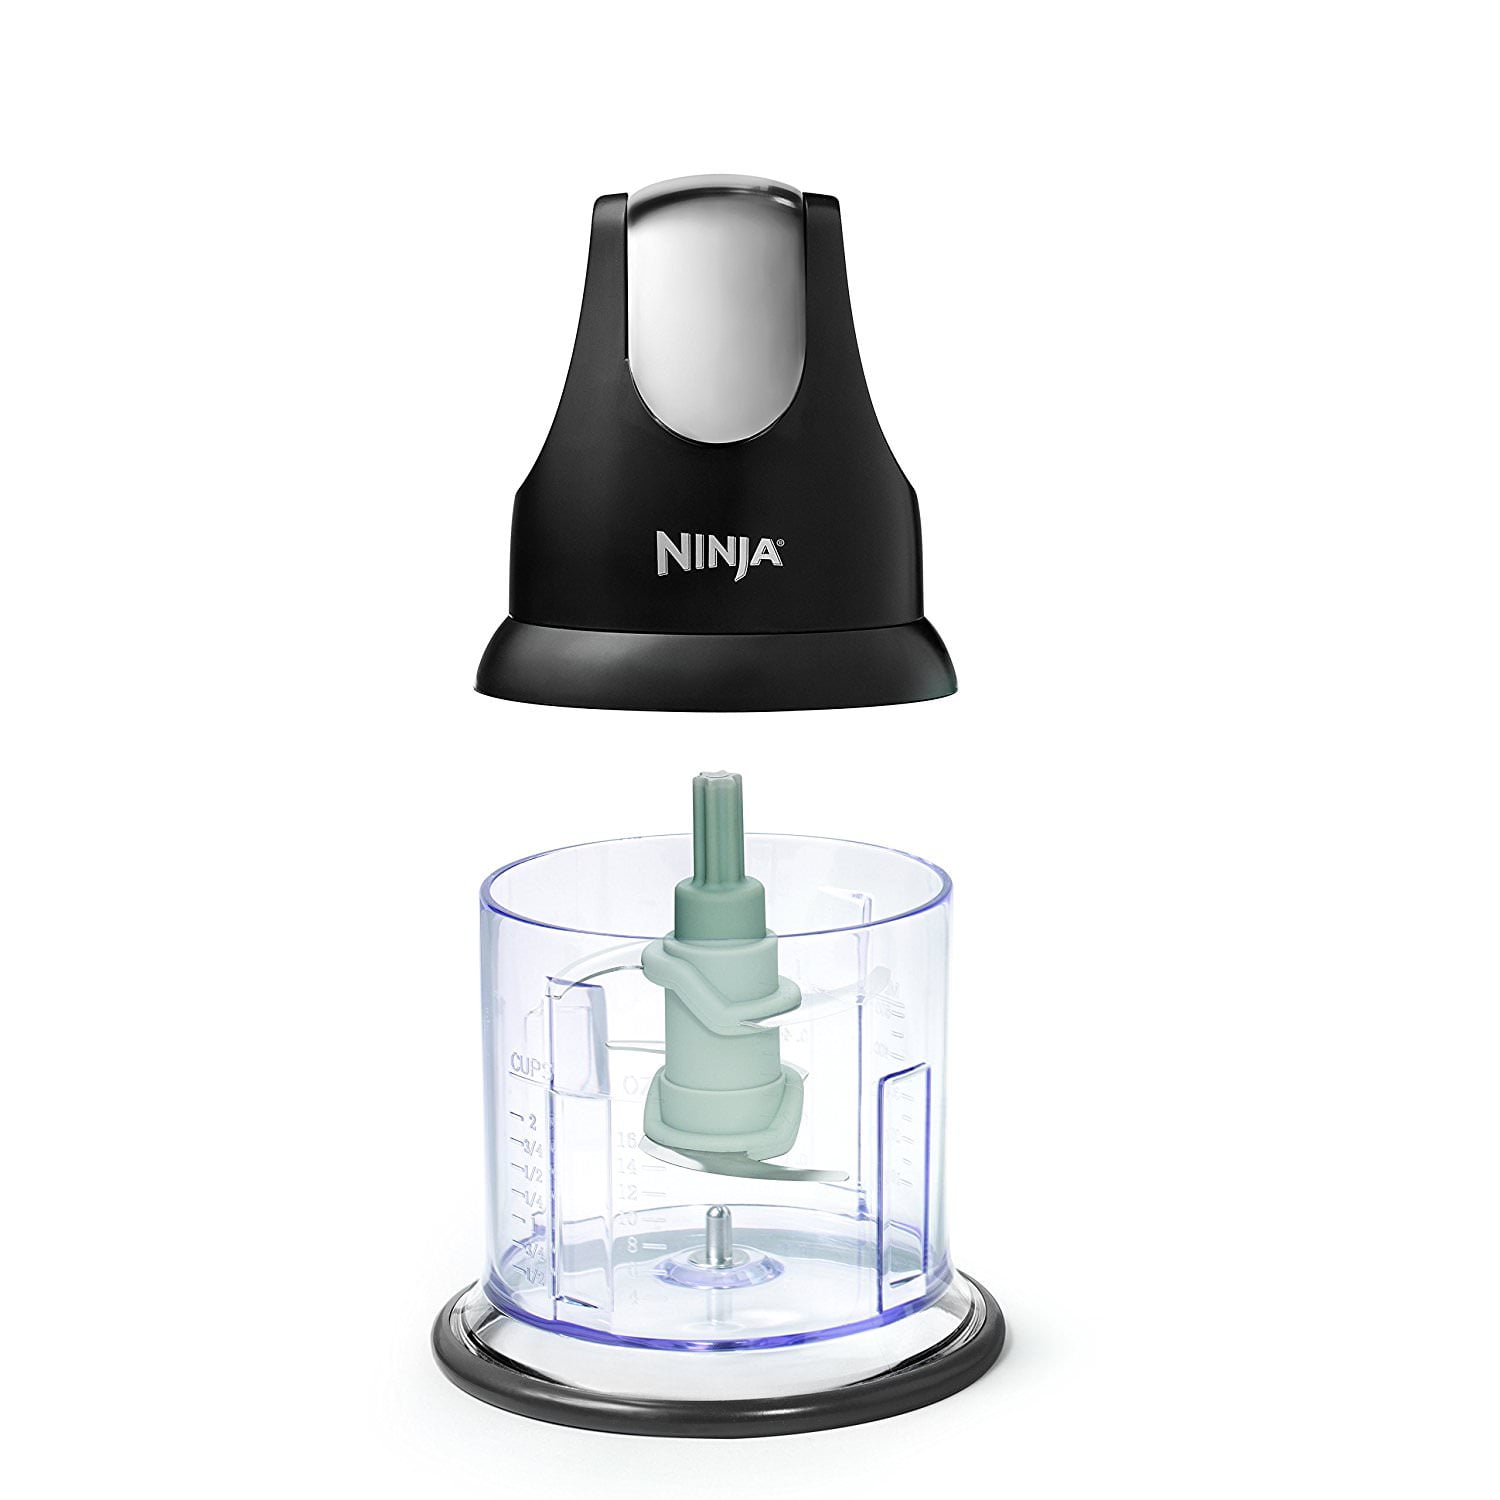 Ninja Ultimate Chopper, Blender & Mini Food Processor NN100UK Review